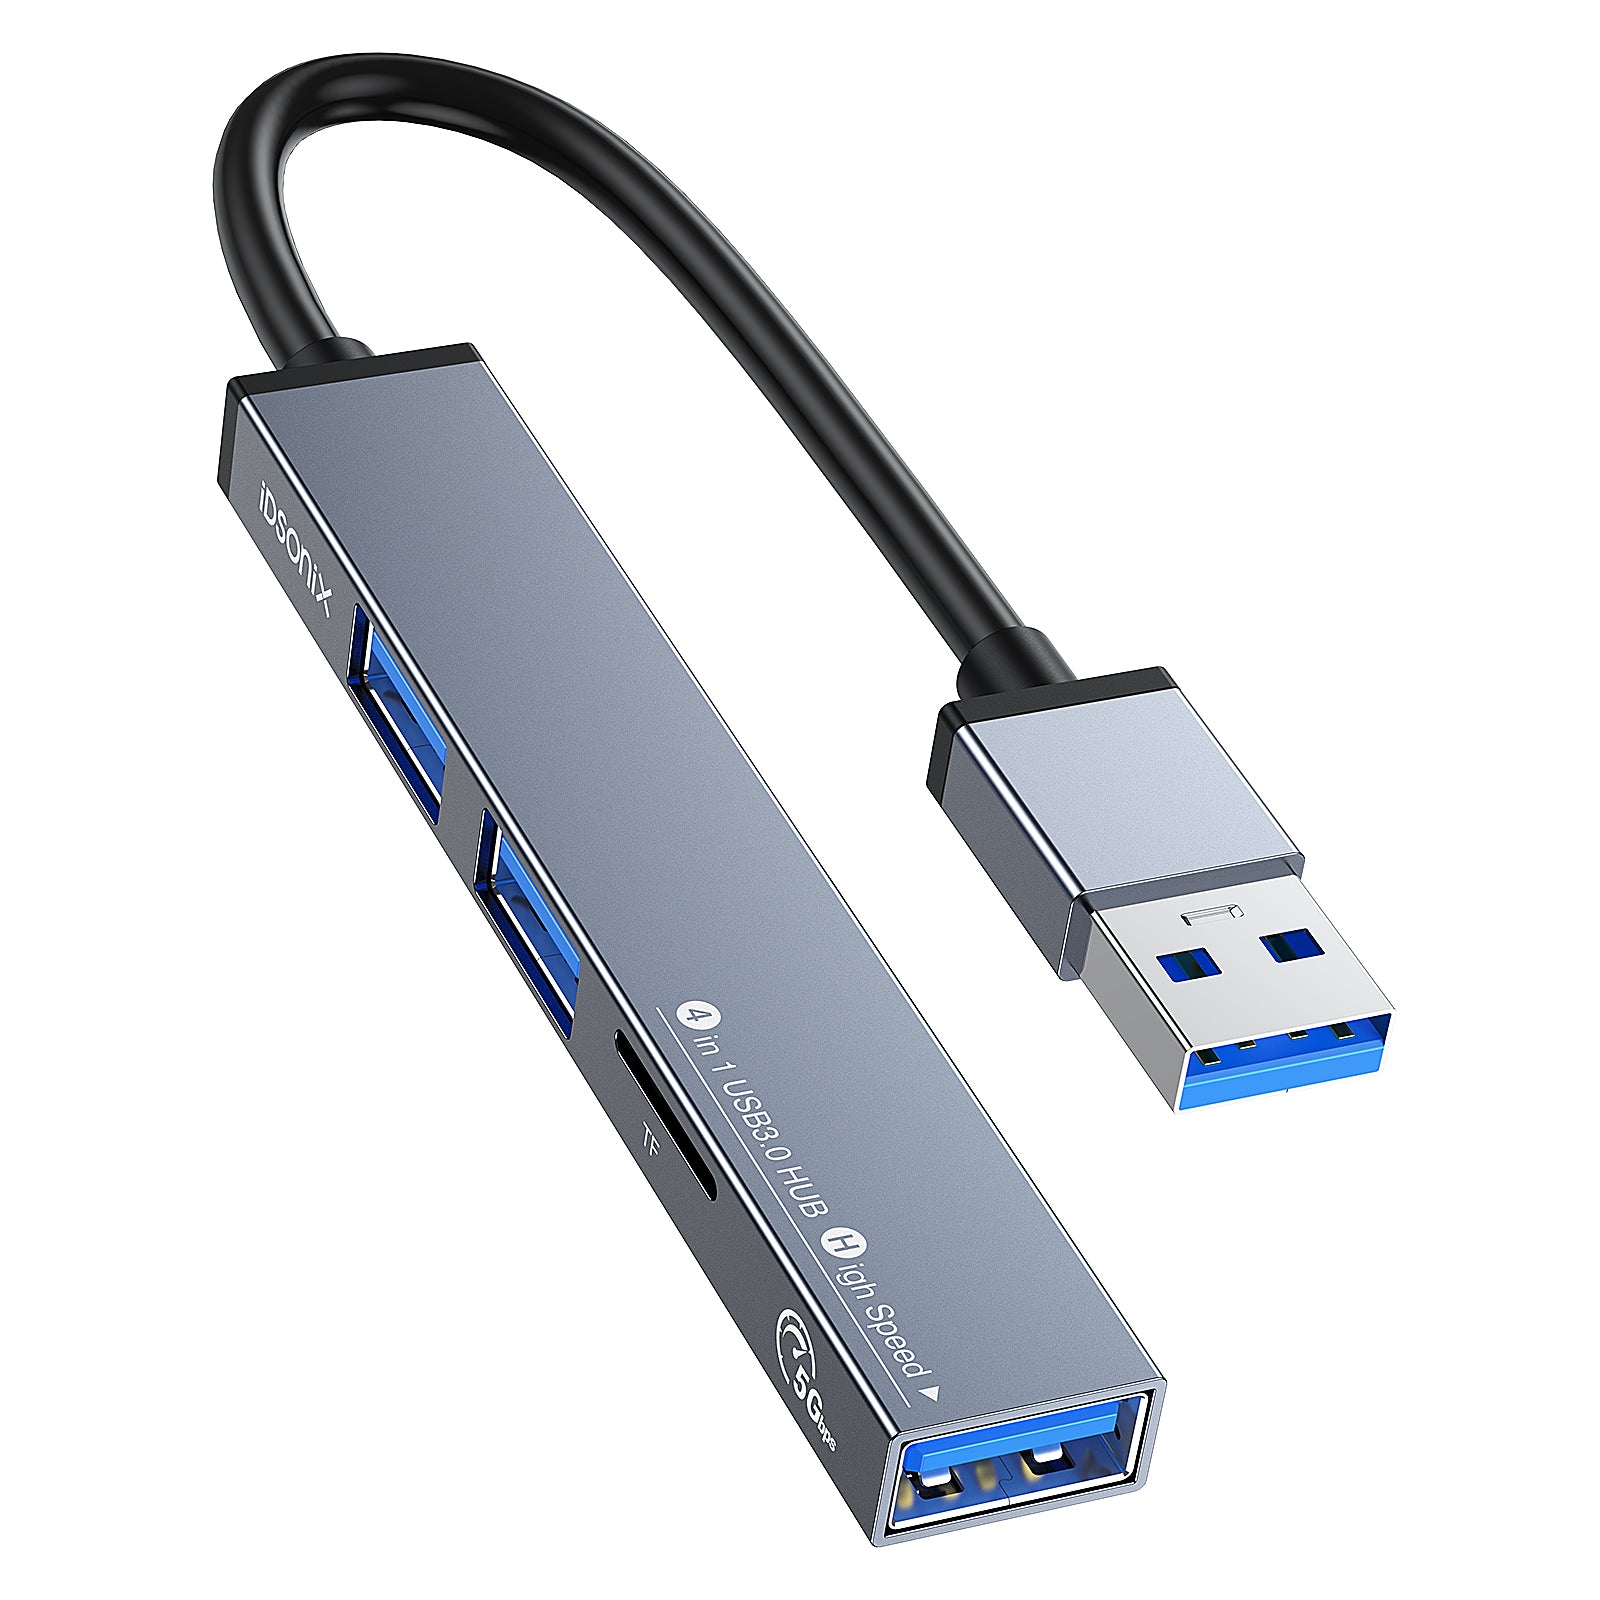 Adaptateur USB 3.0 vers Ethernet, iDsonix Hub USB 3.0 à 3 ports